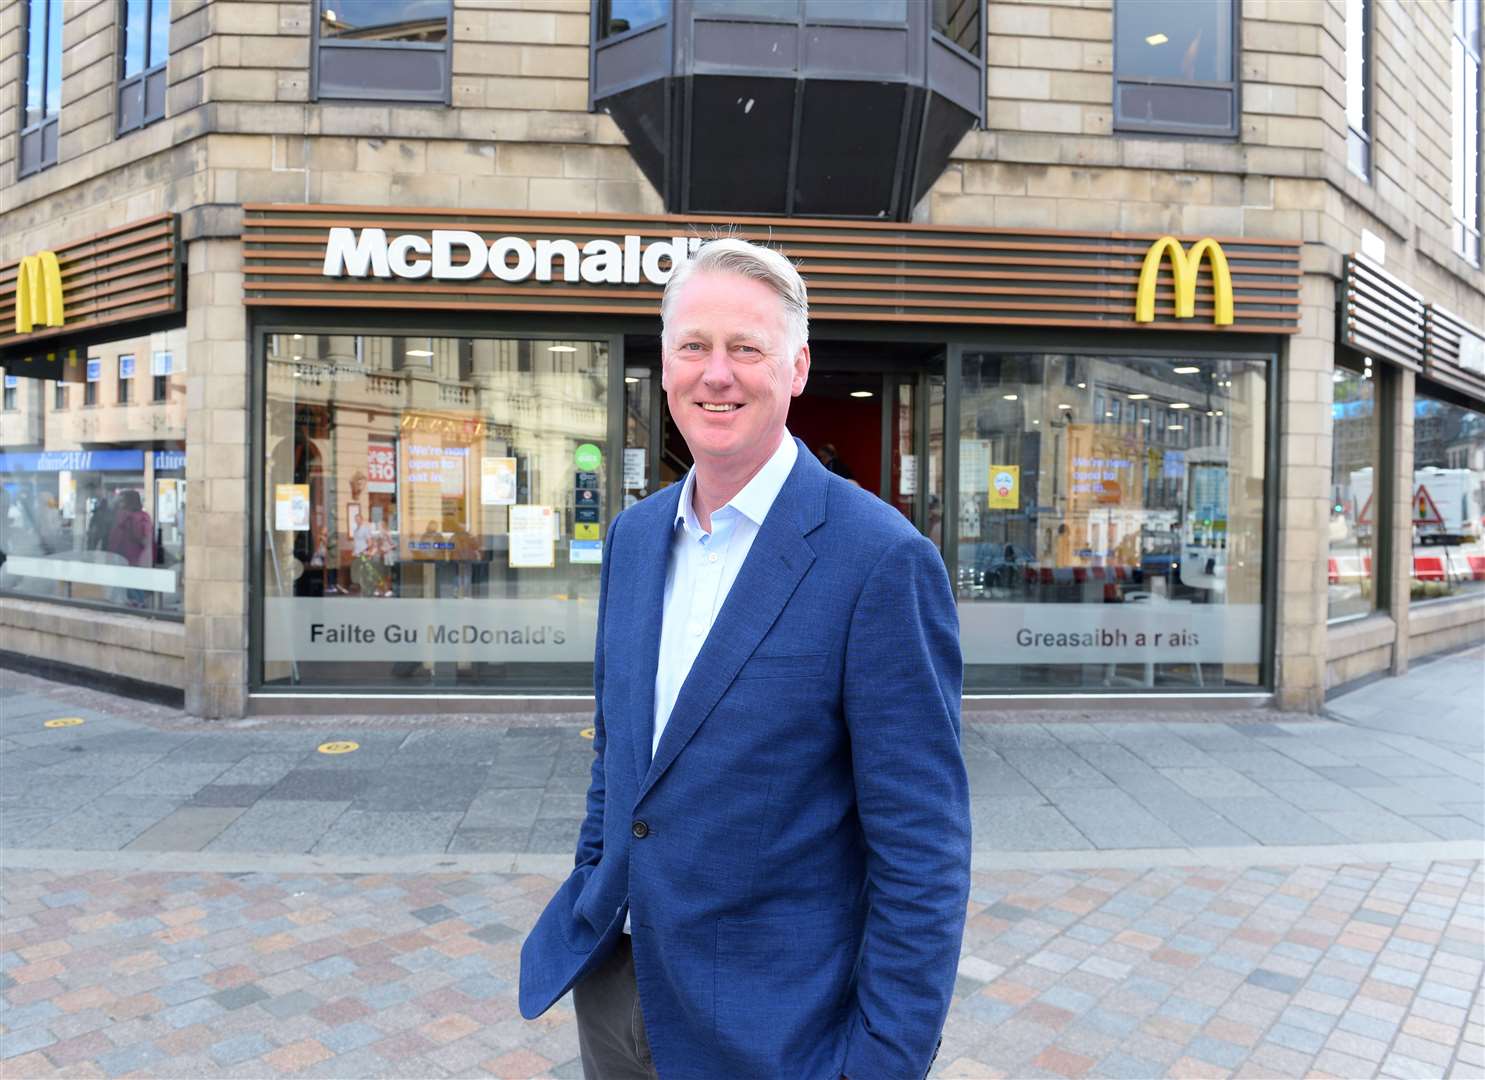 Craig Duncan has made the donation on behalf of McDonald's customers.